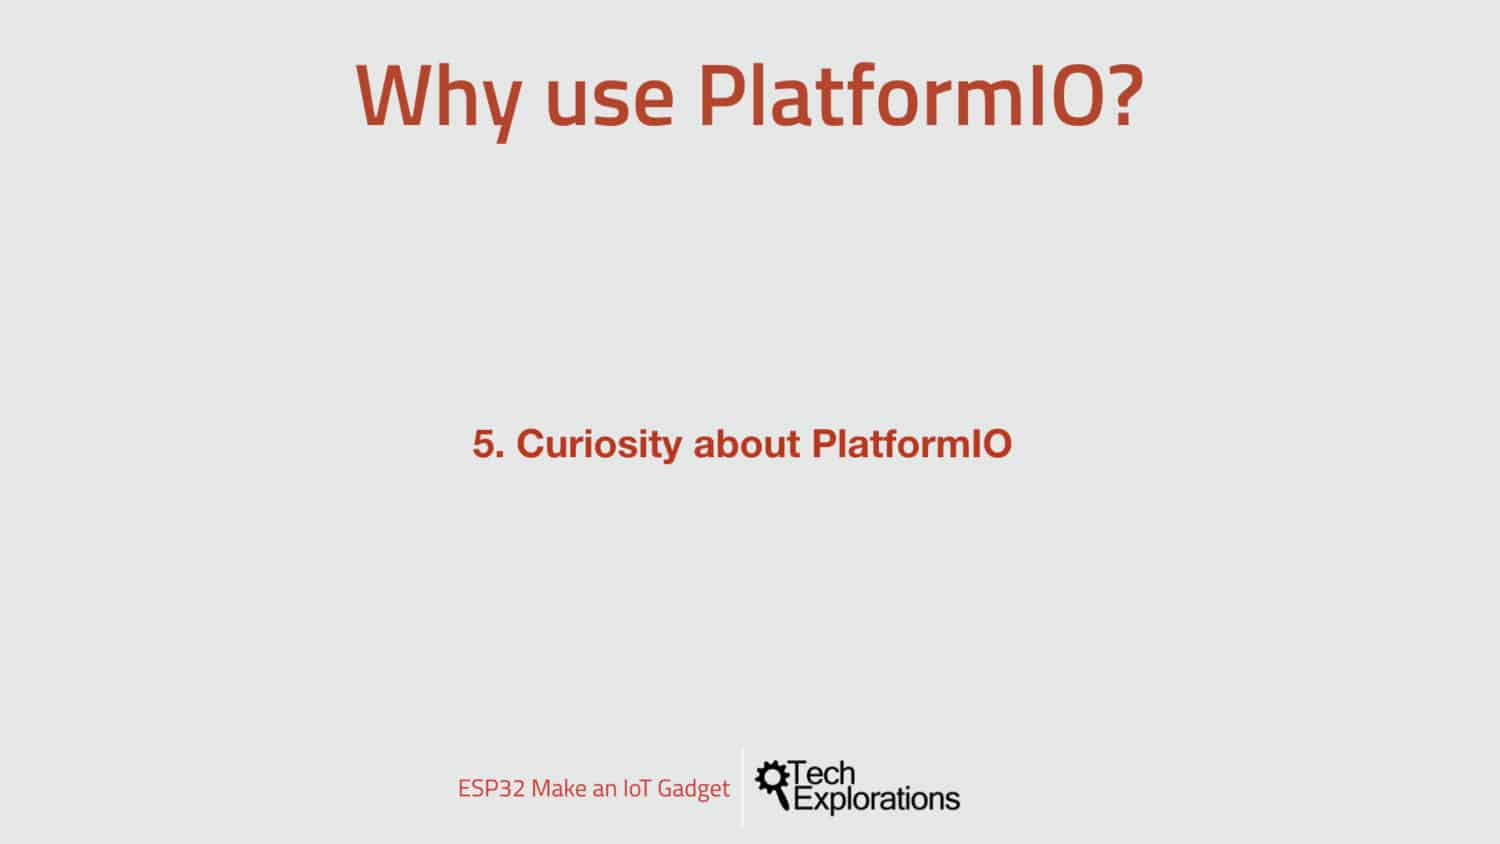 Why use PlatformIO, reason 5: curiosity.